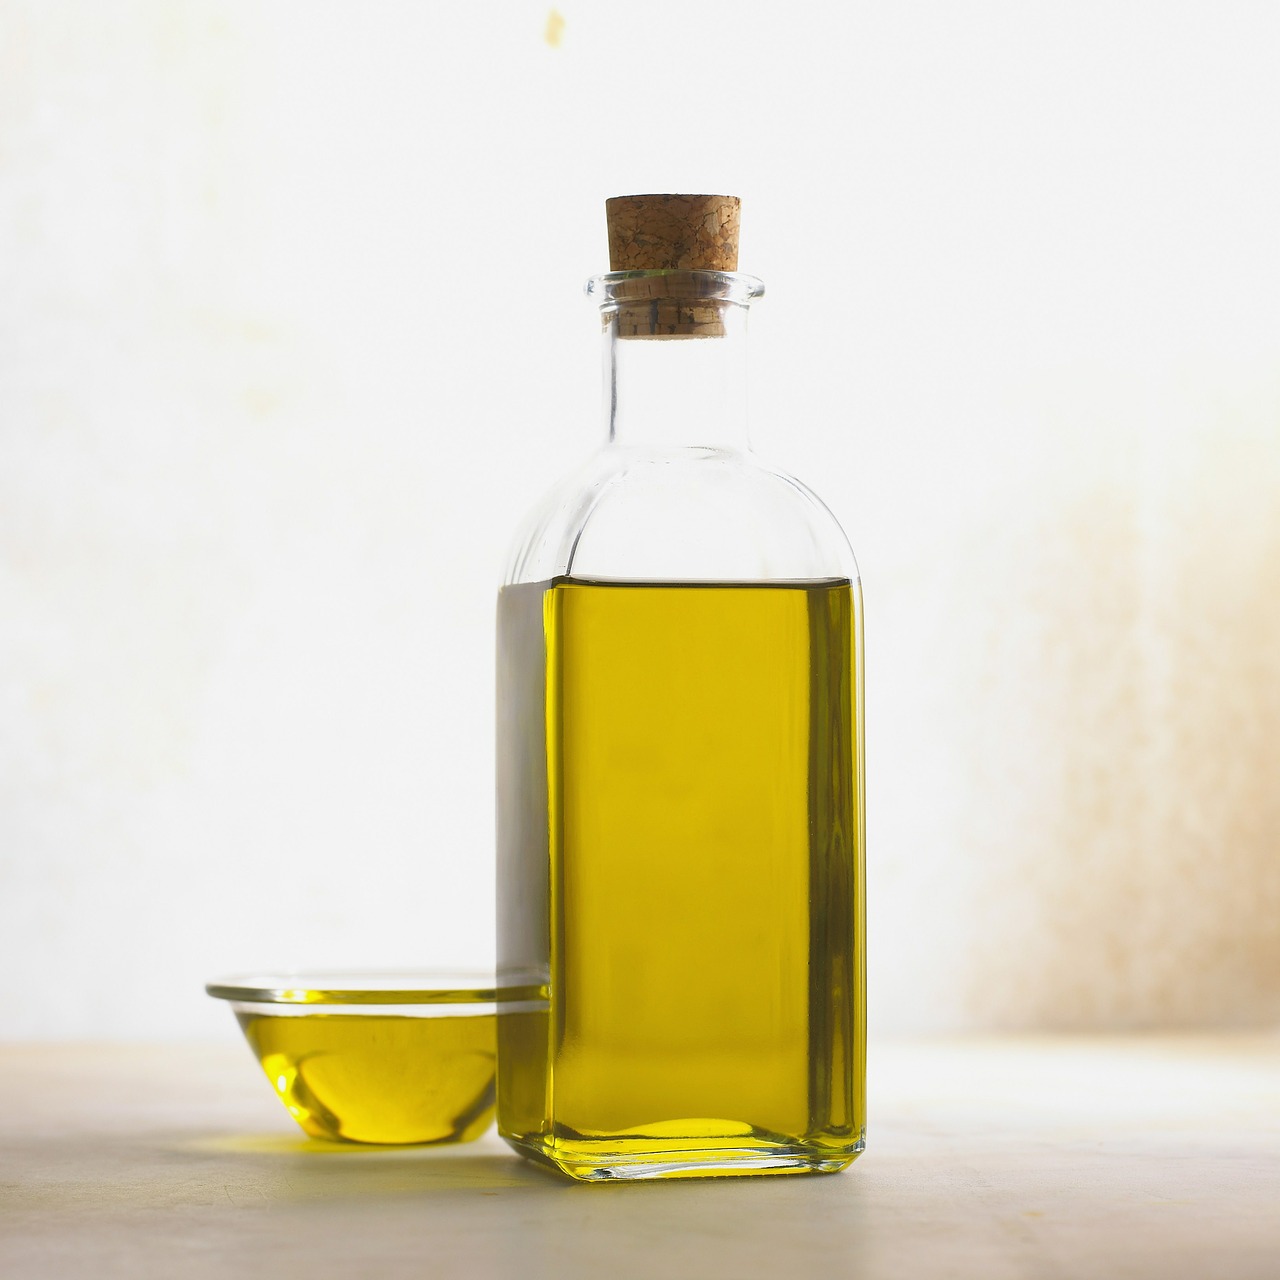 olive oil photo